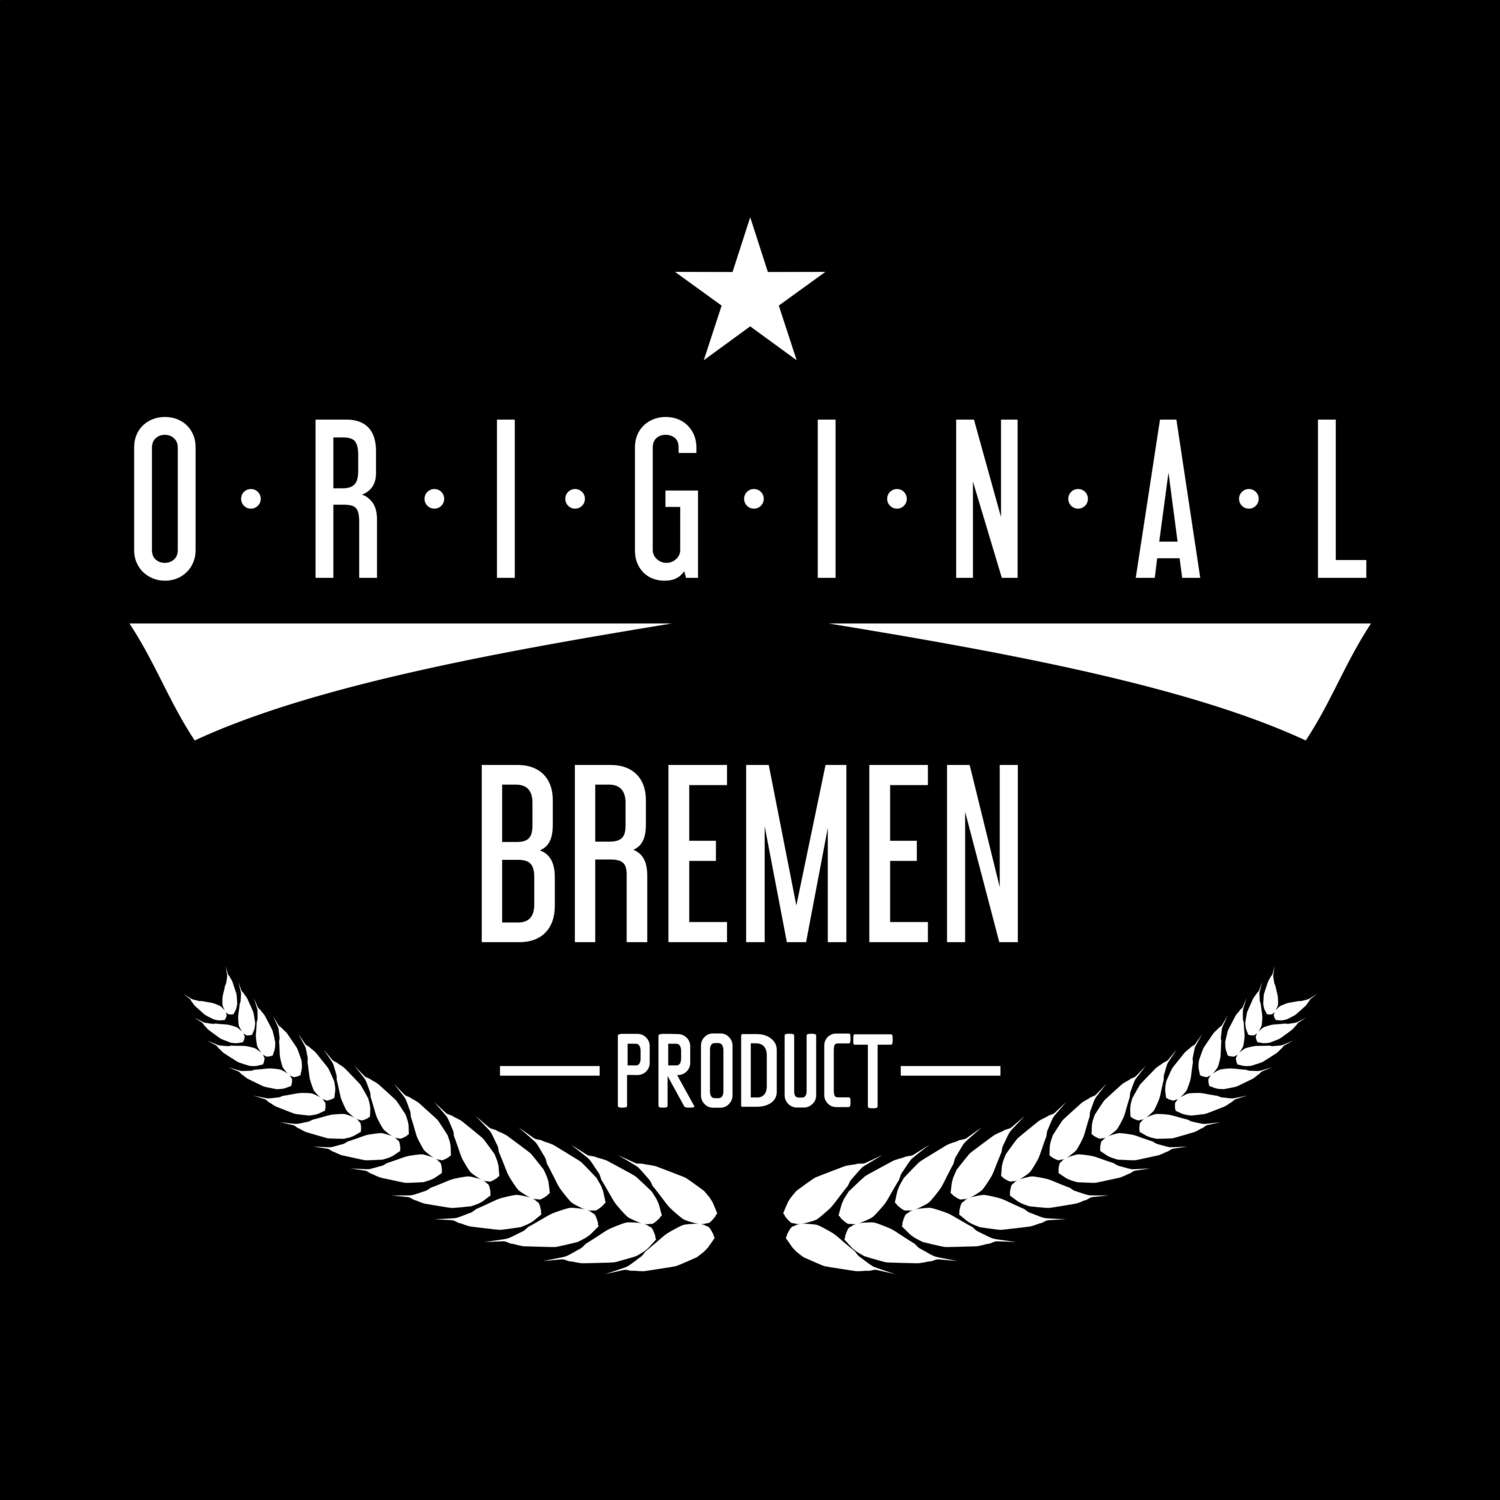 Bremen T-Shirt »Original Product«